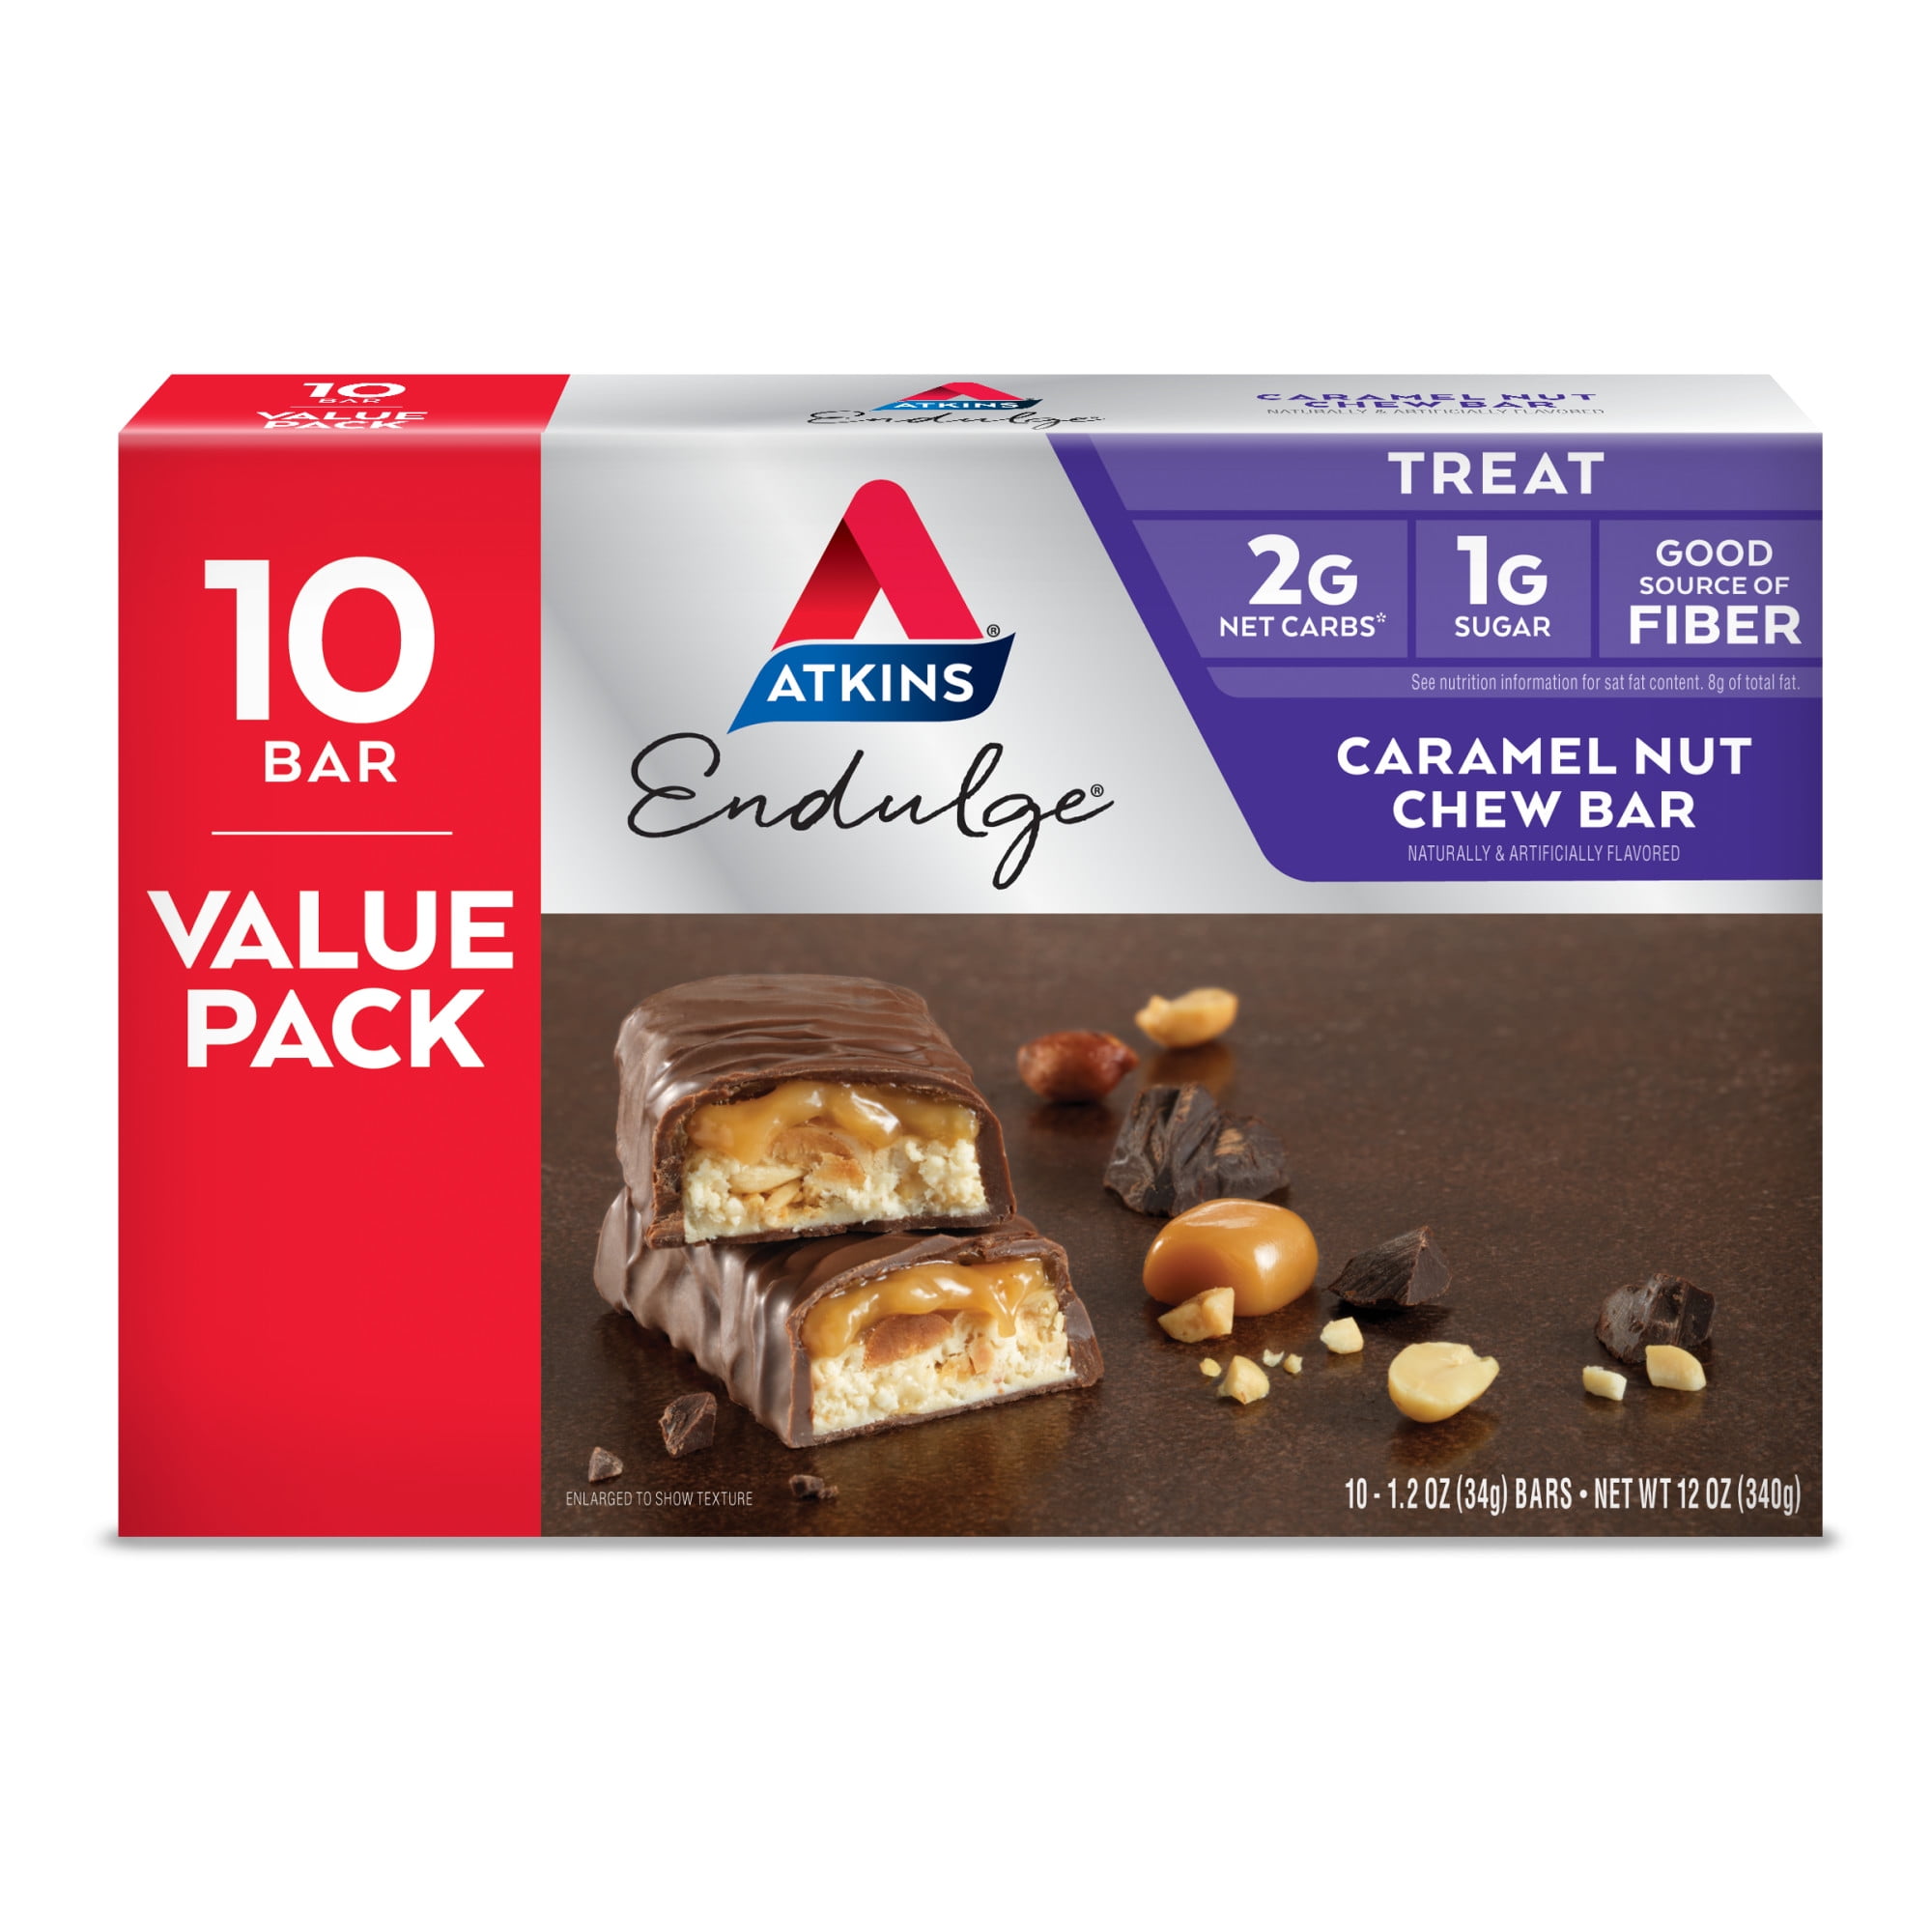 Atkins Endulge Treat, Caramel Nut Chew Bar, Keto Friendly, 10 Count (Value Pack)